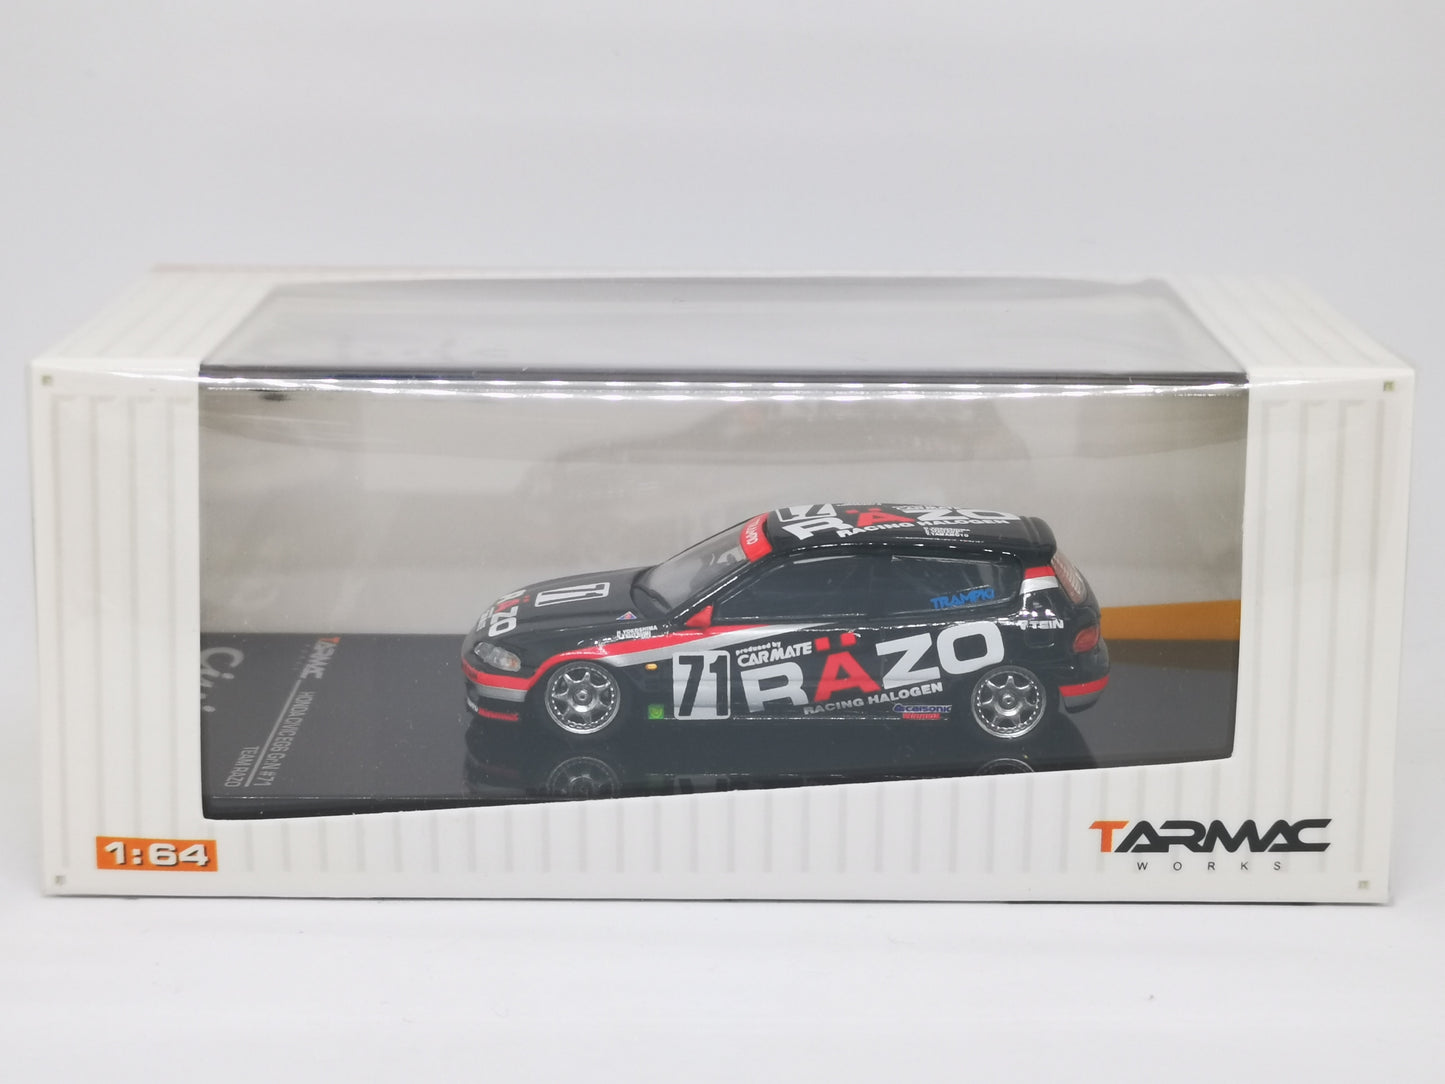 Tarmacworks Honda Civic Eg6 Gr.N Racing Razo Racing #71 1:64 Scale